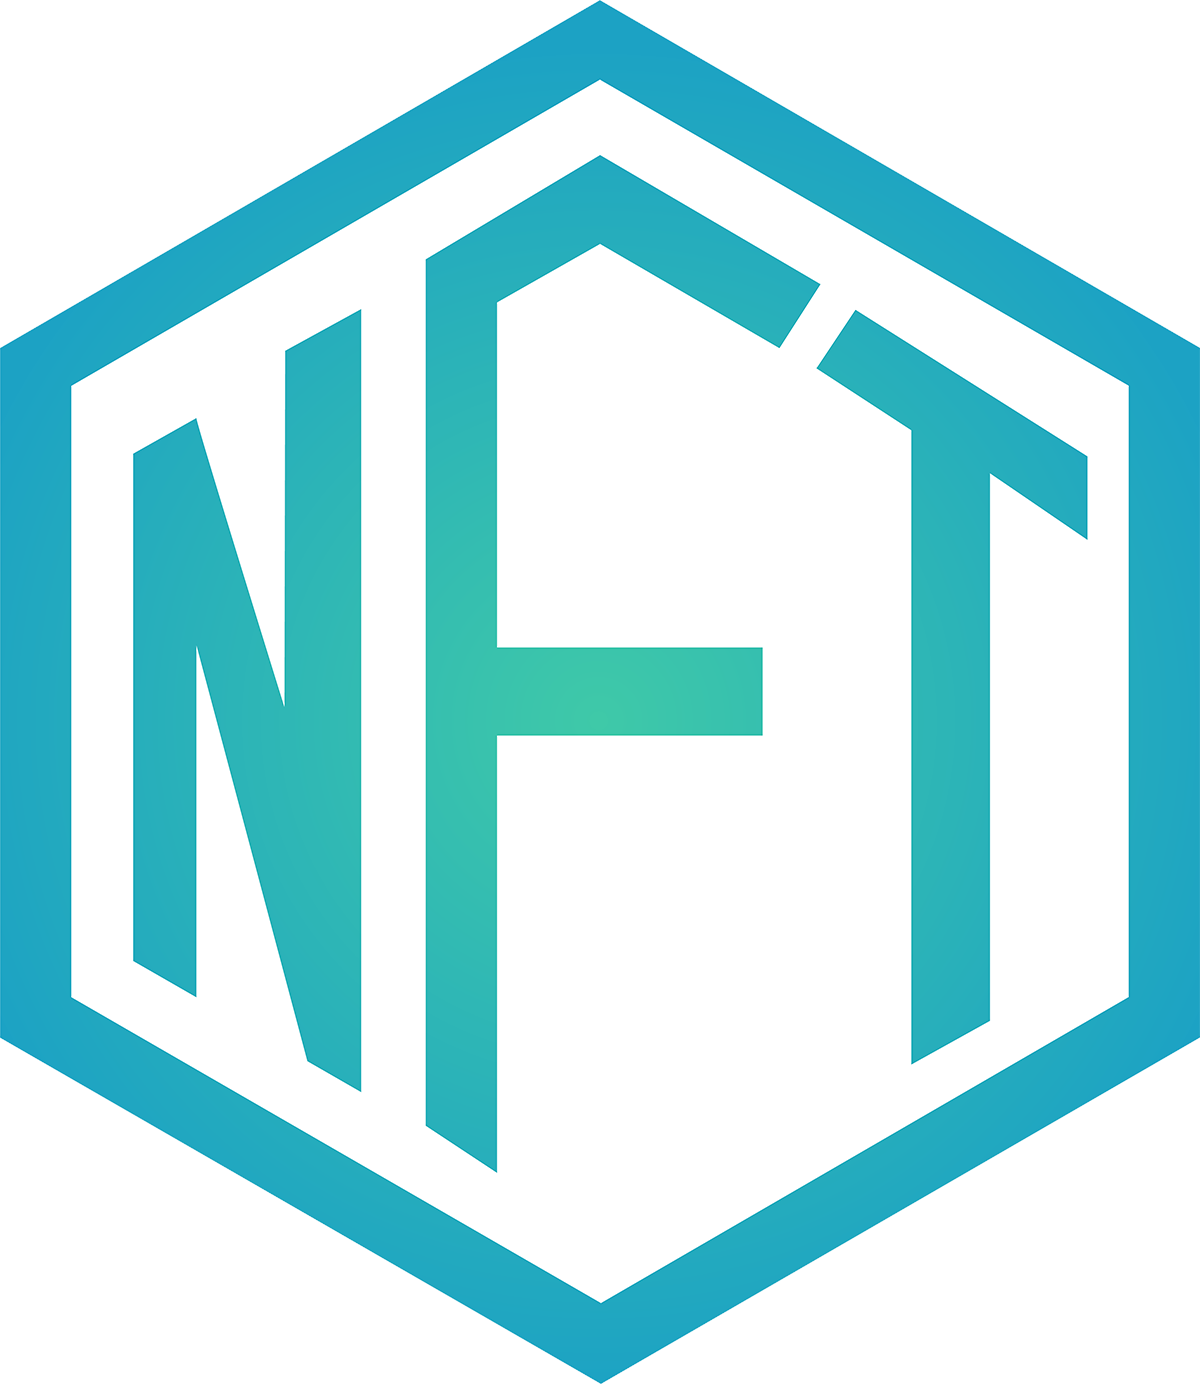 The official NFT logo